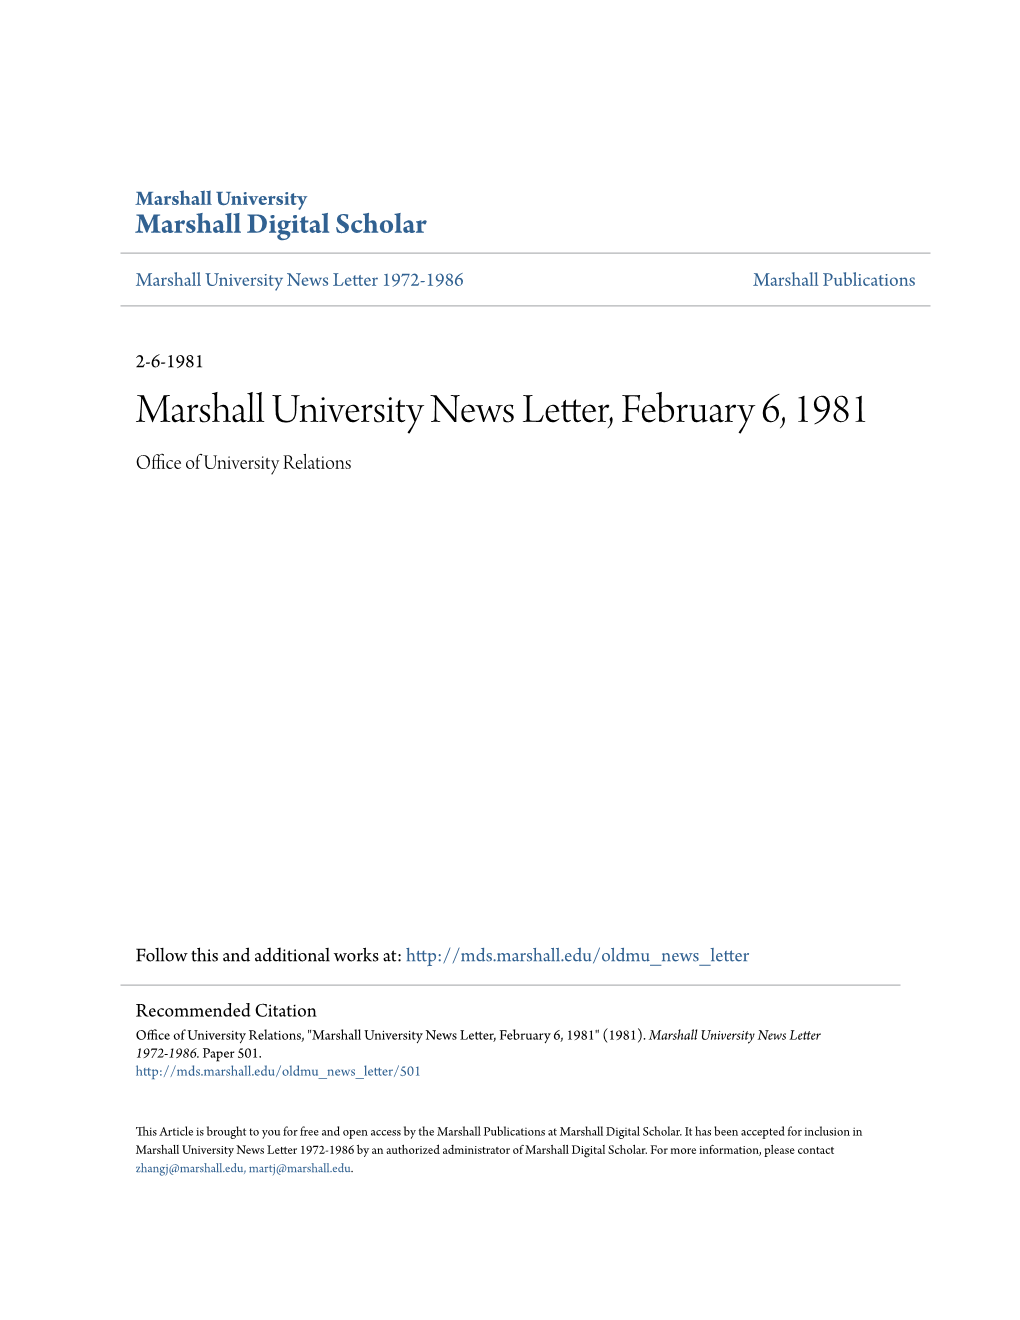 Marshall University News Letter, February 6, 1981 Office Ofni U Versity Relations